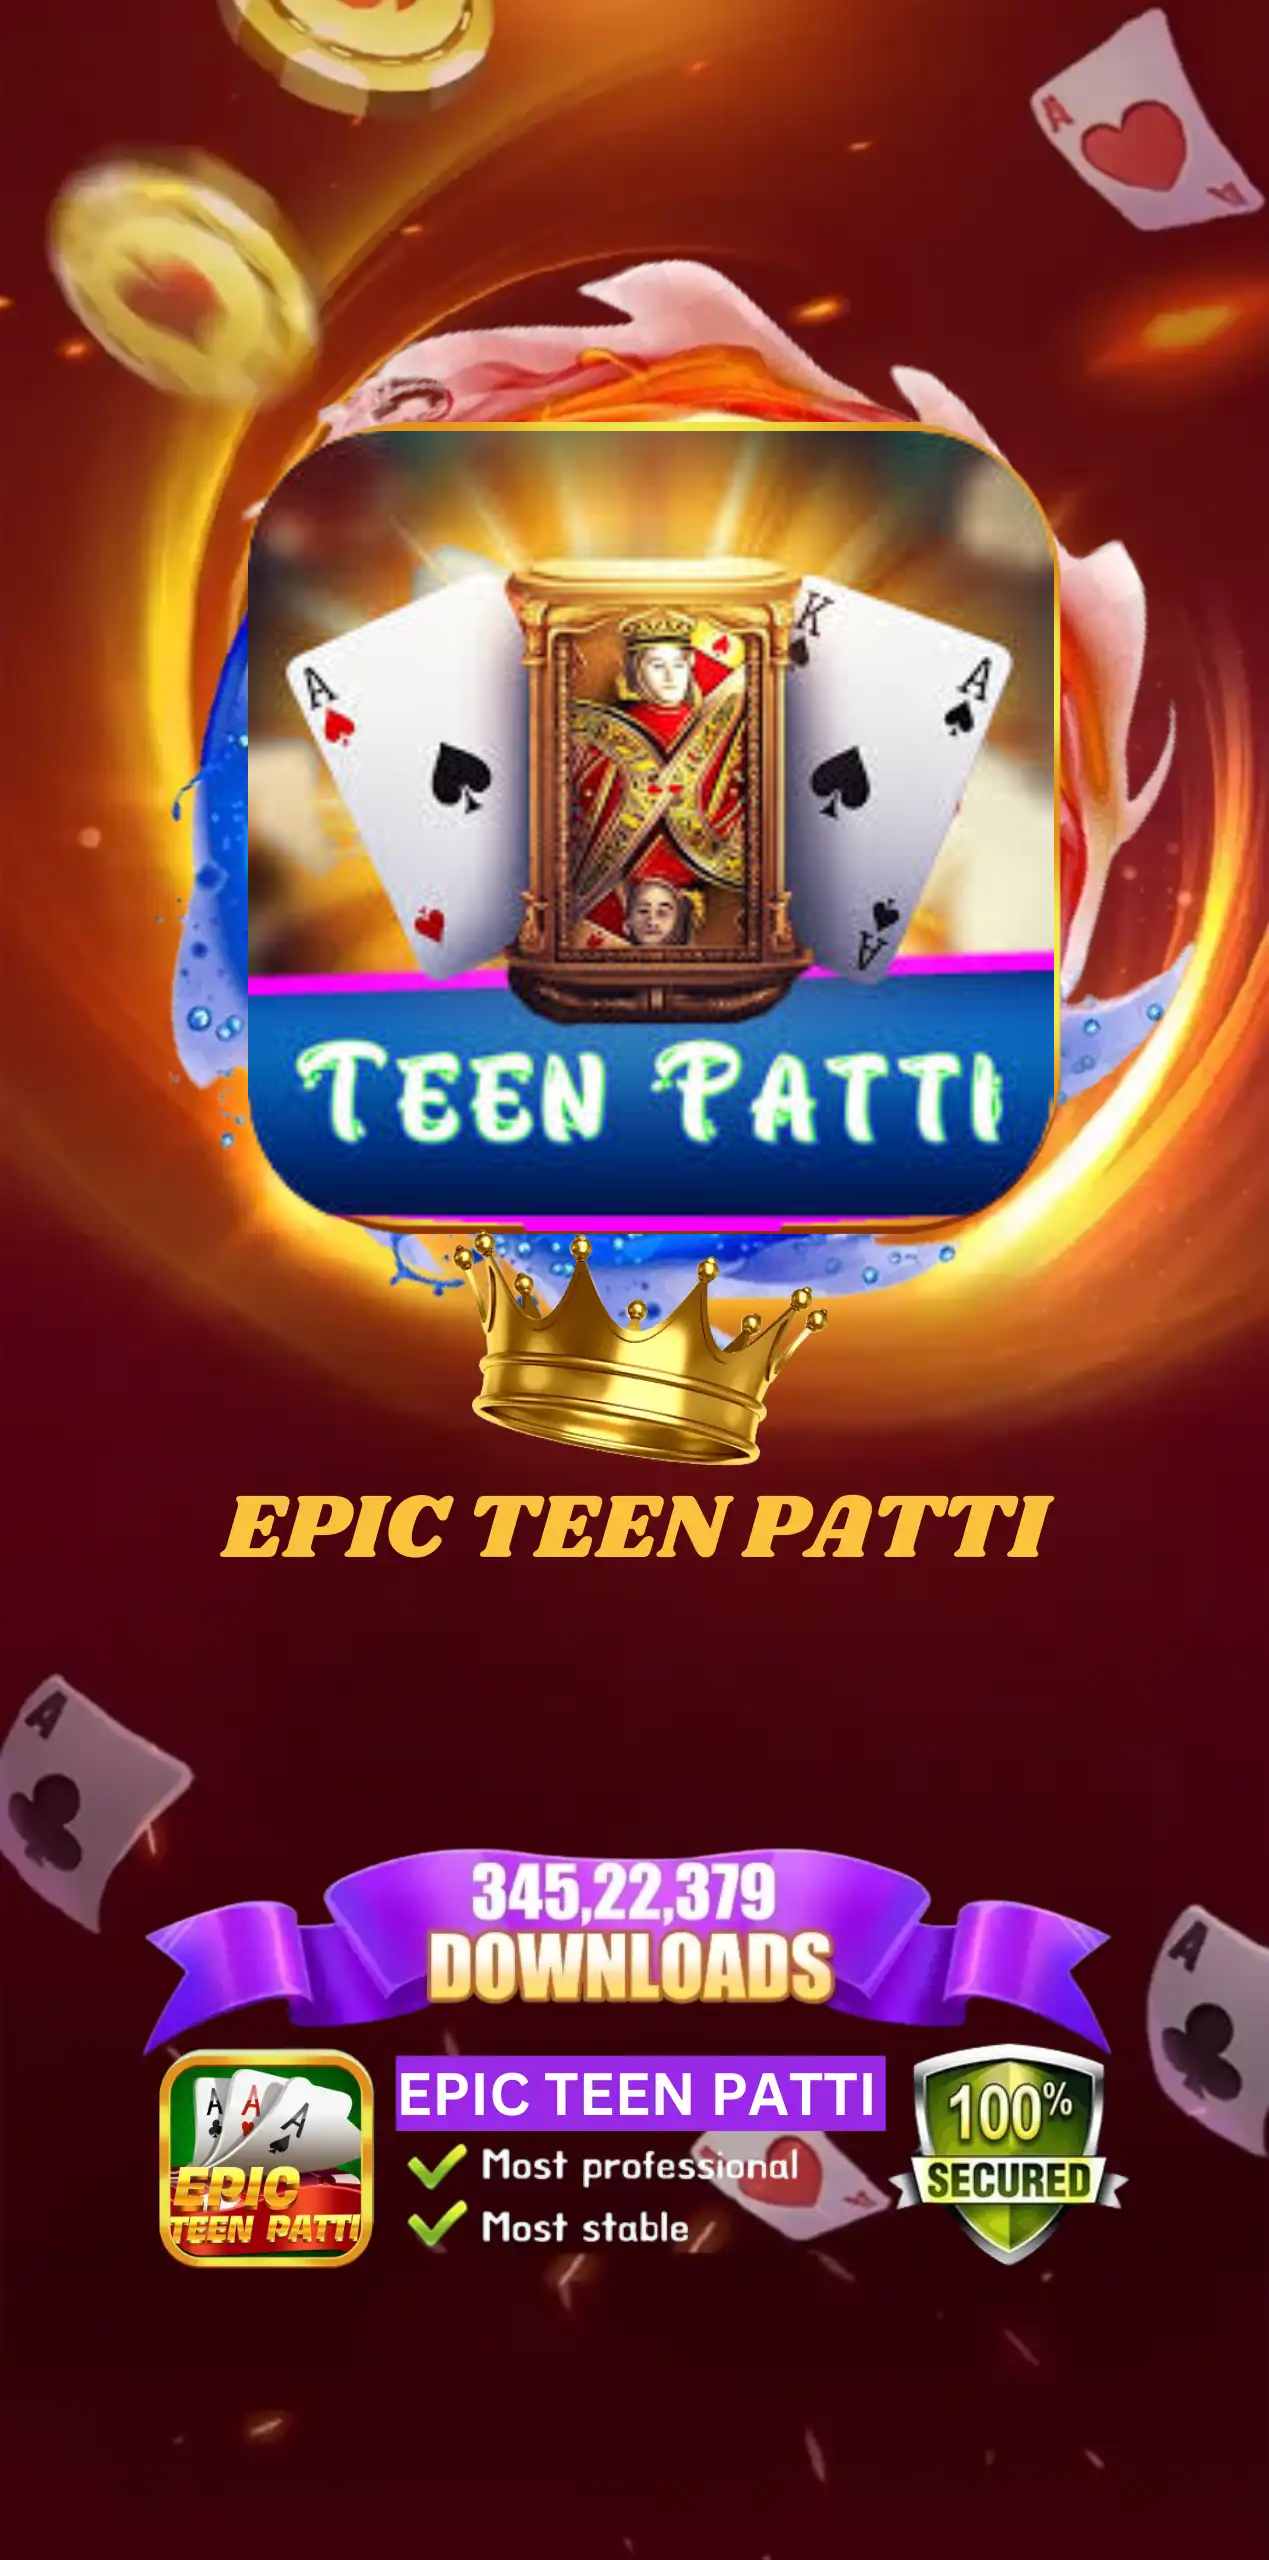 Epic Teen Patti